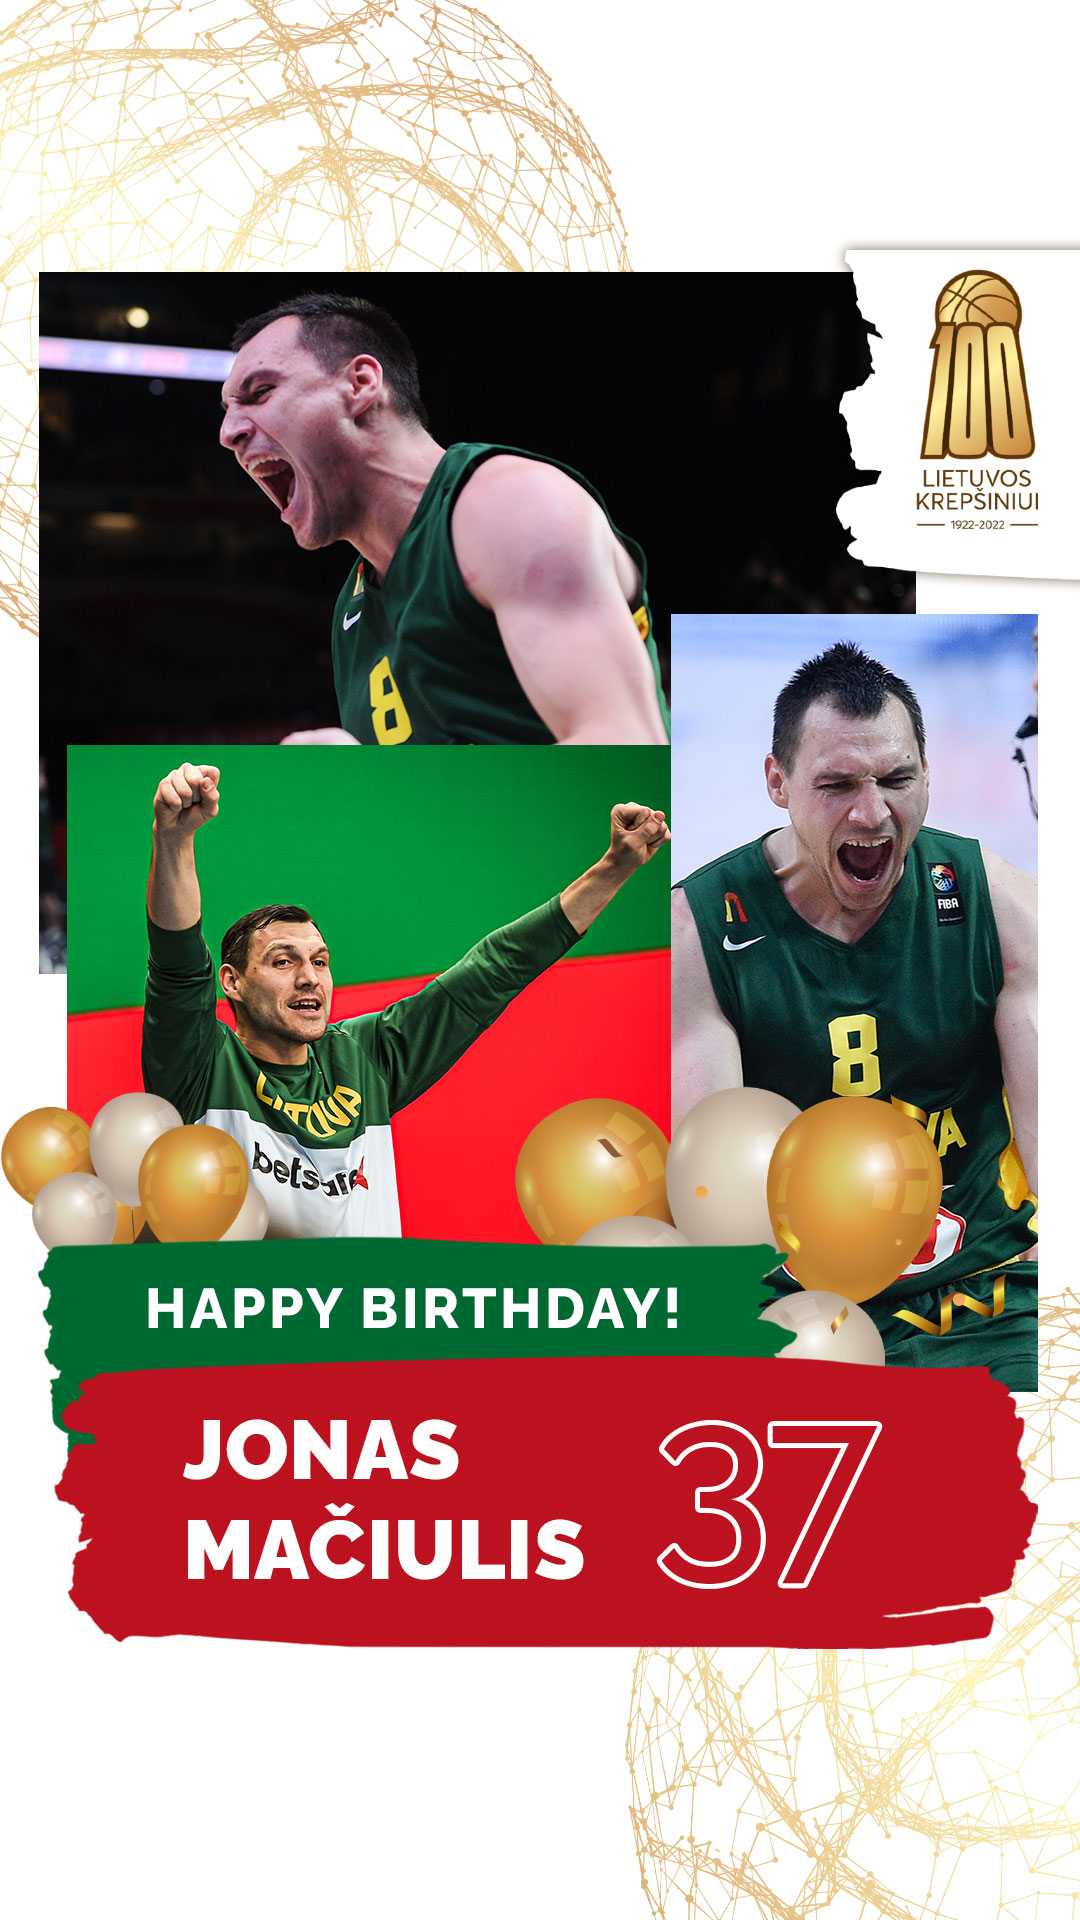 Happy birthday to one of our toughest warriors Jonas Ma iulis!   